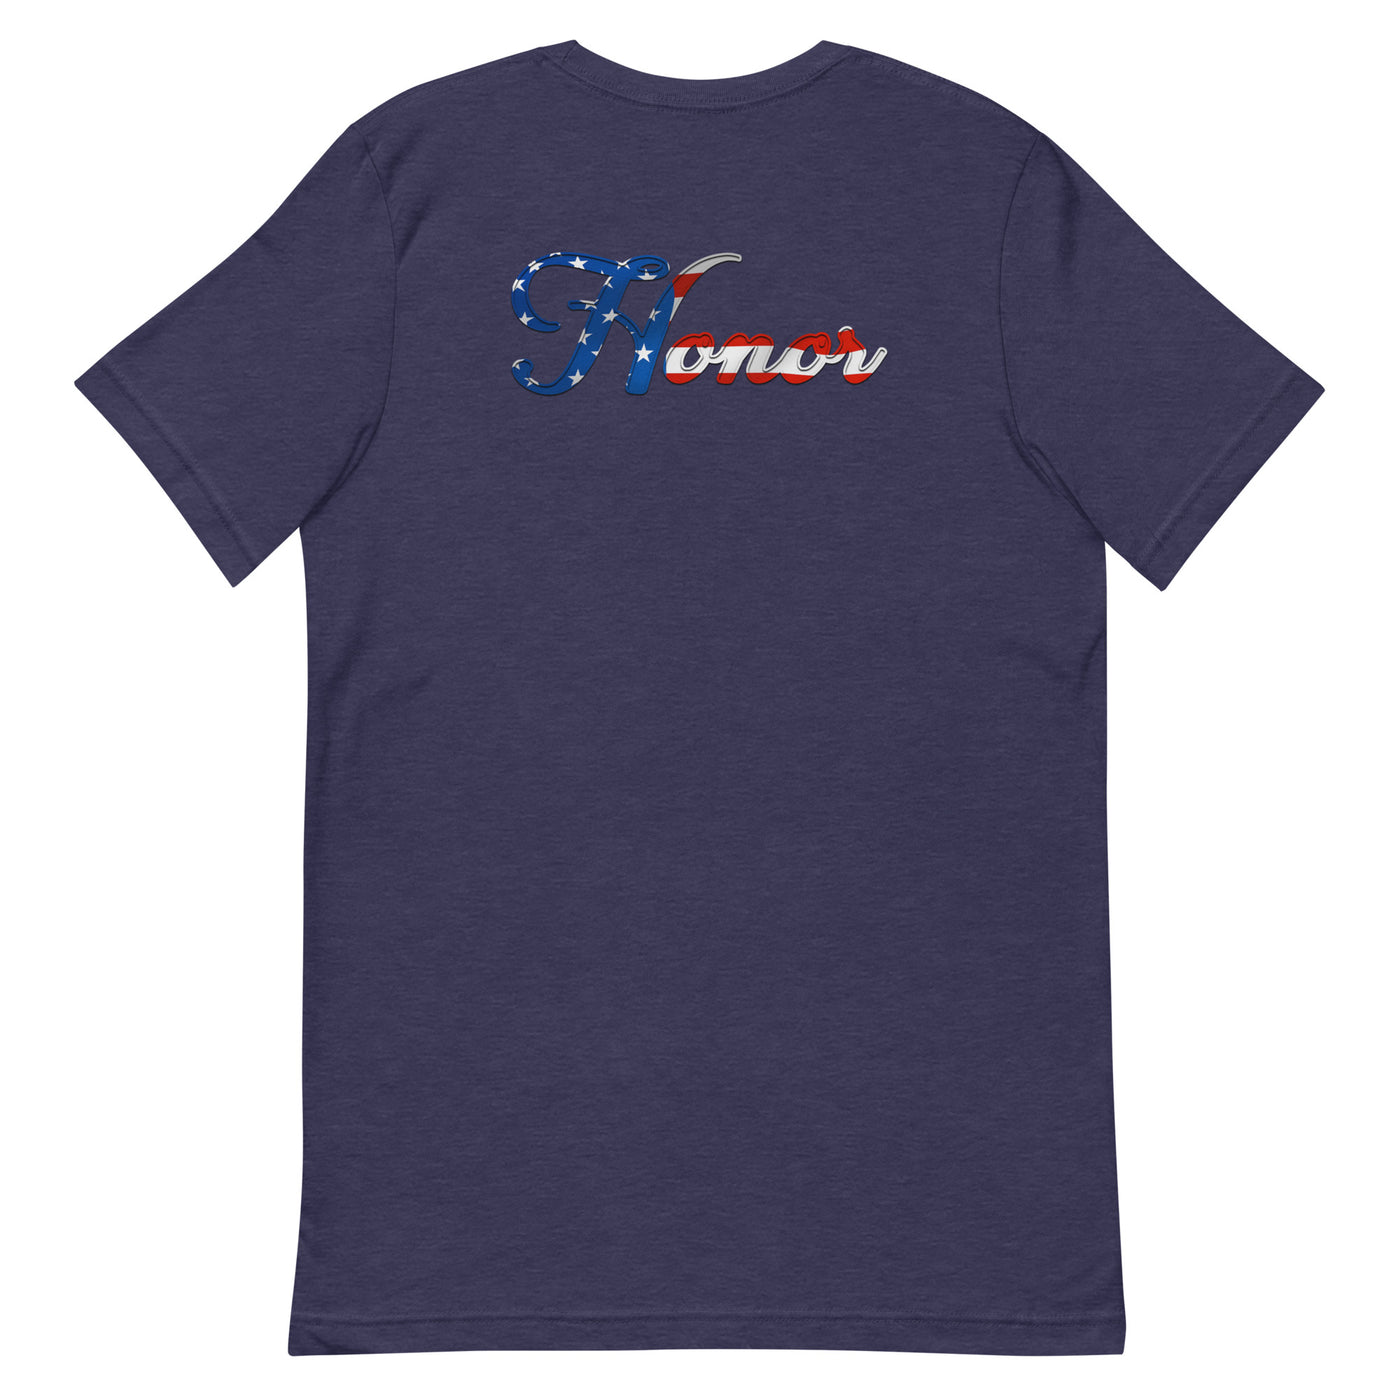 Honor - Unisex t-shirt